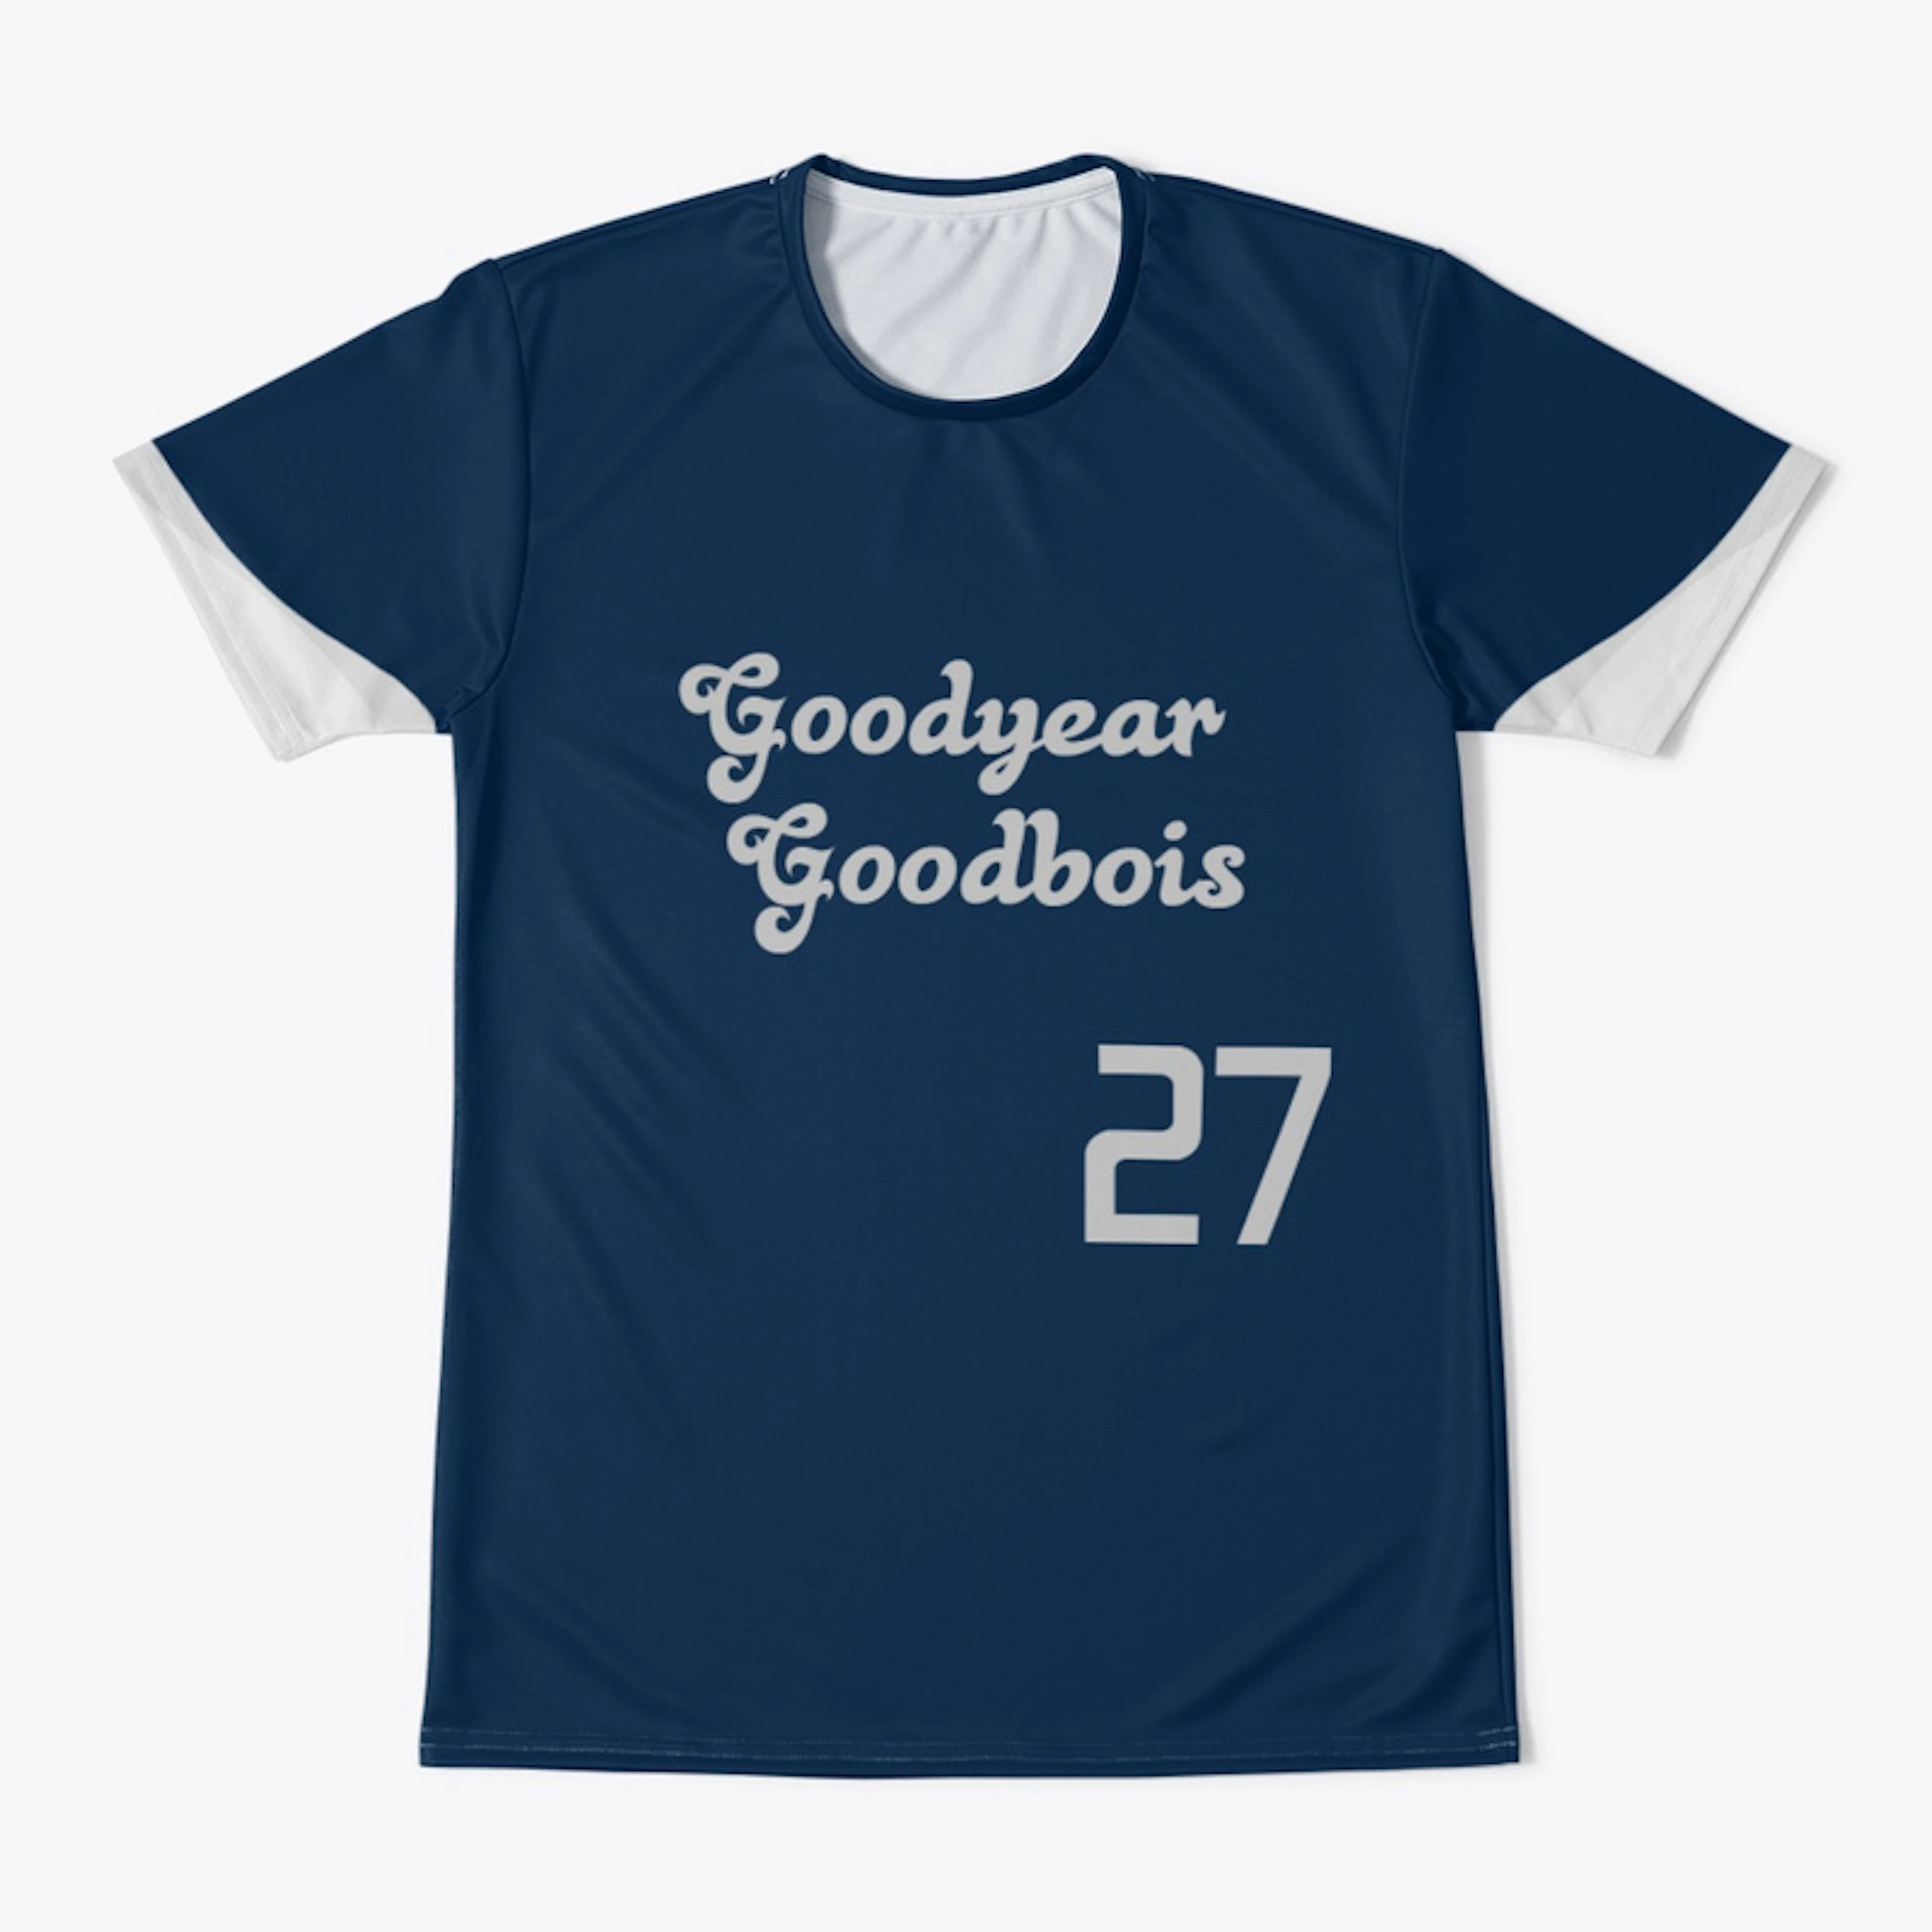 Goodyear Goodbois Jersey